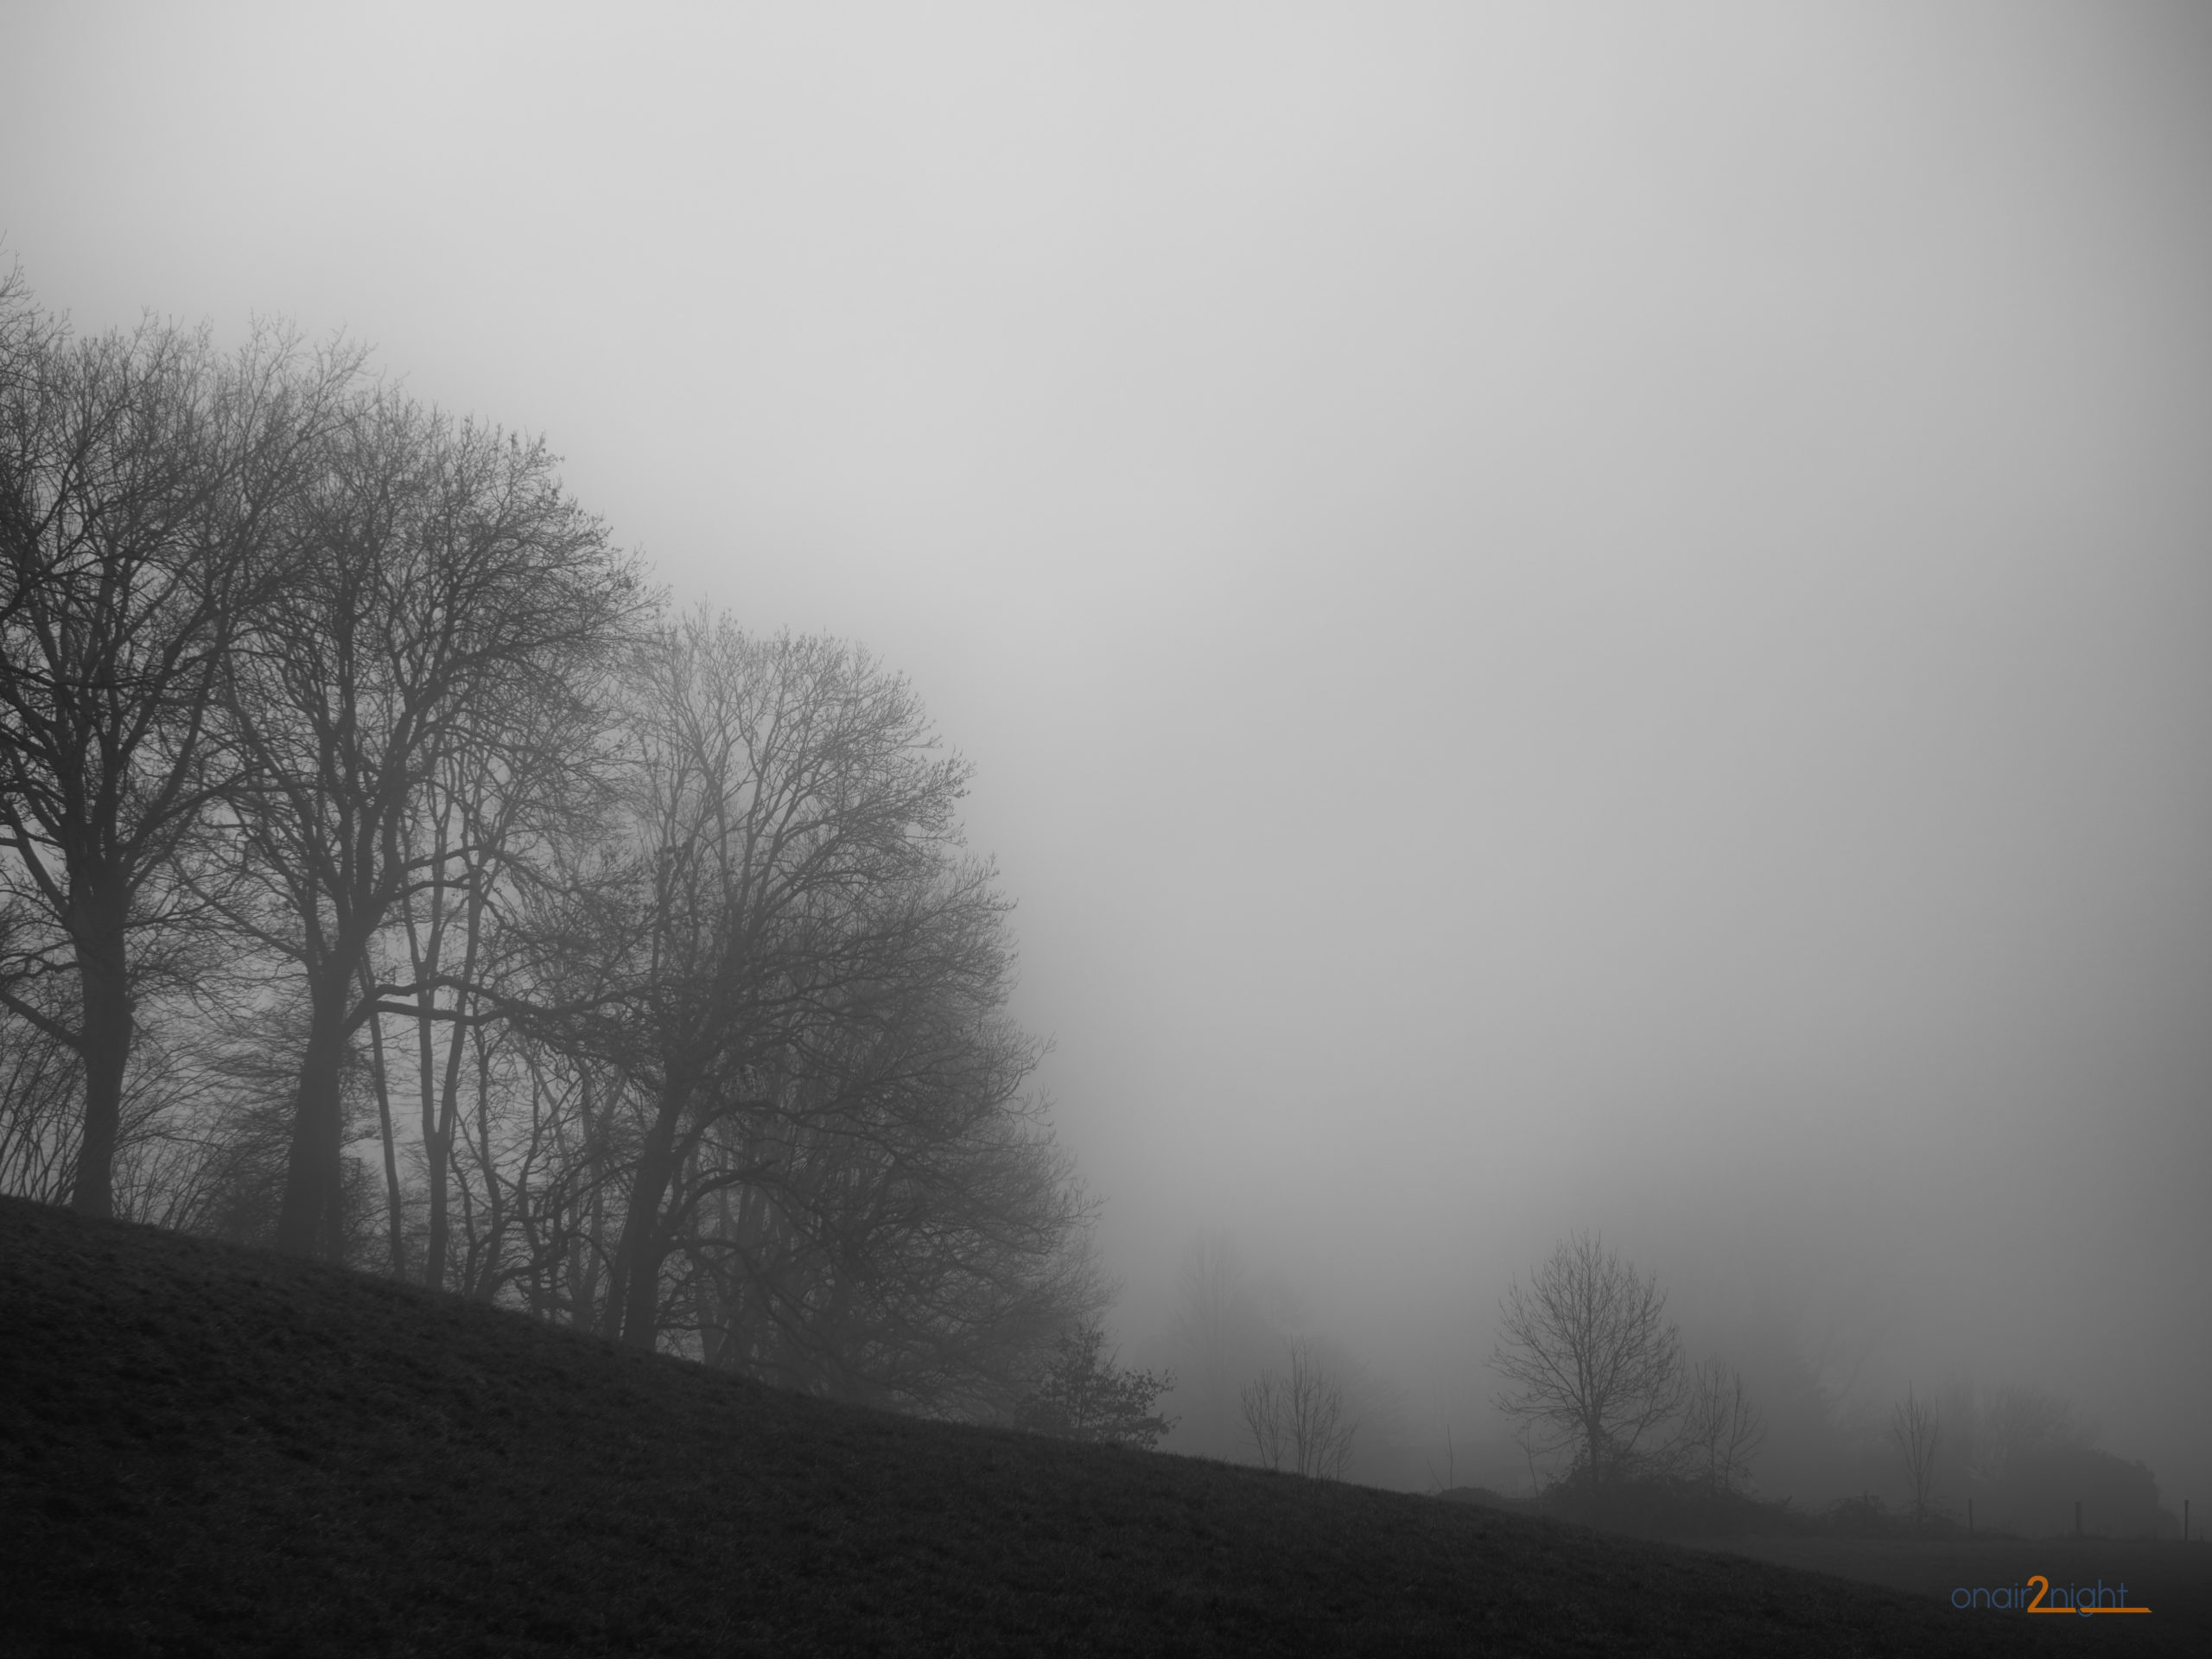 Bäume-Nebel_02_oa2n